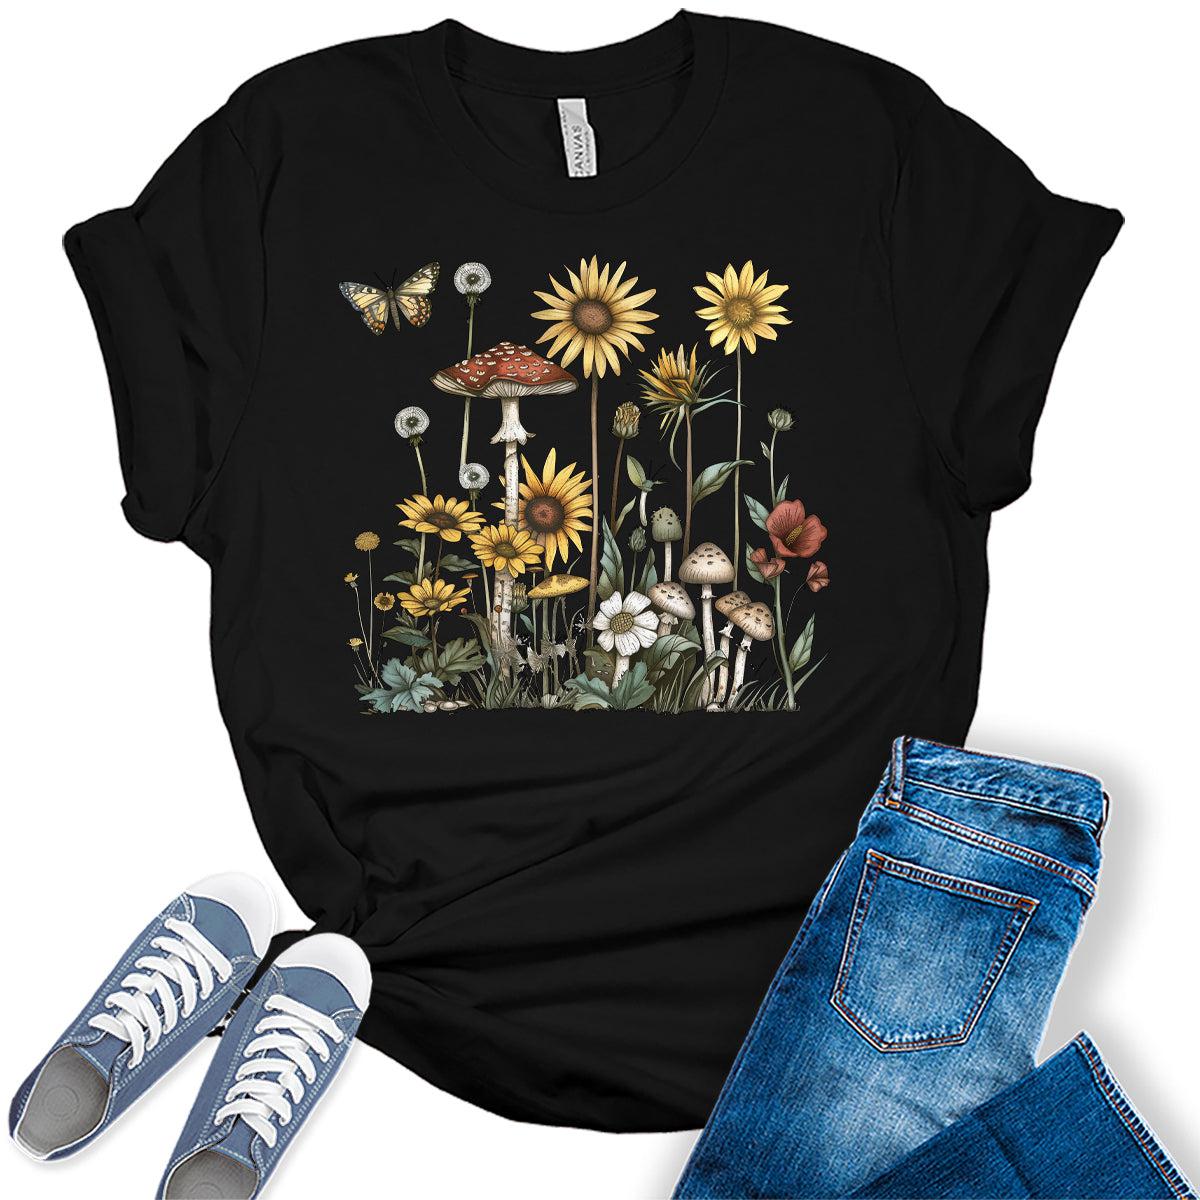 Sunflower Shirts Mushroom Cottagecore Aesthetic Womens Graphic Tees